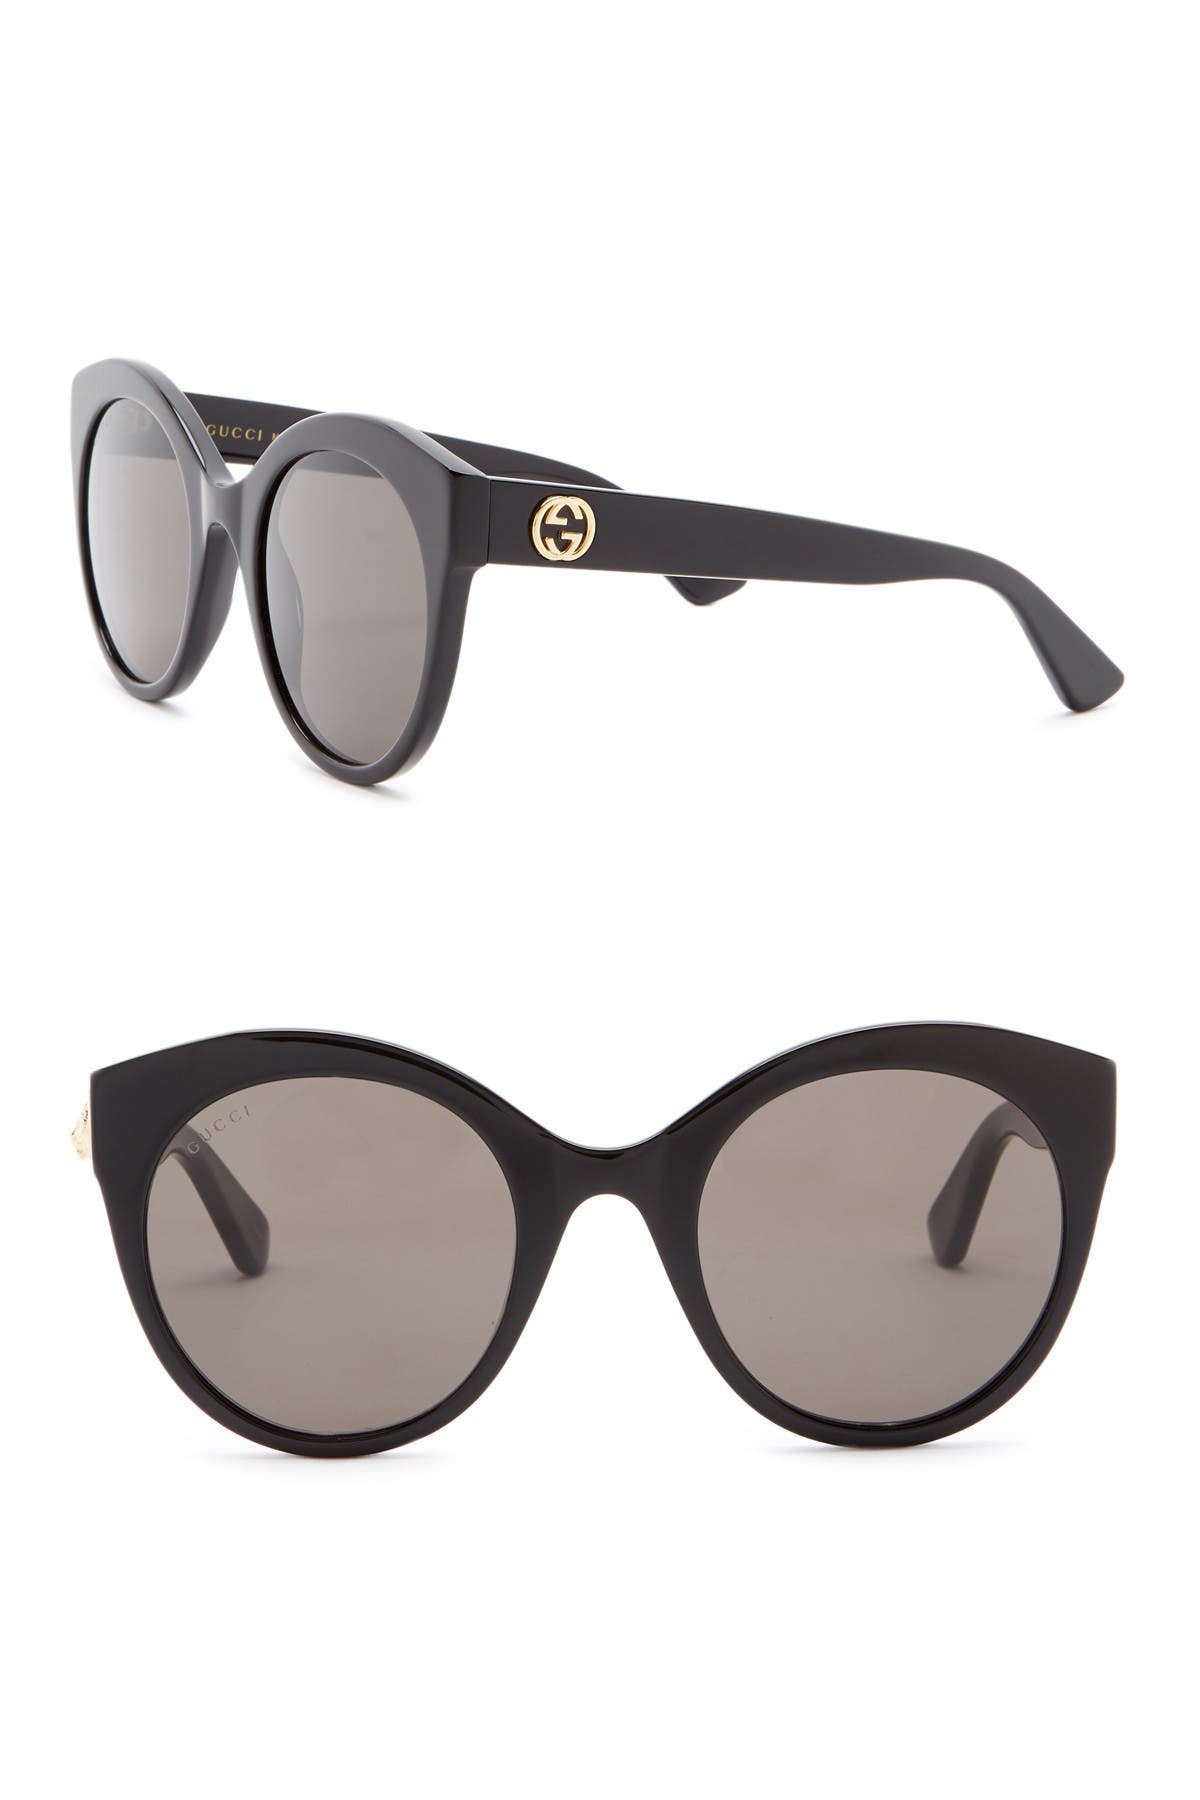 gucci round cat eye sunglasses